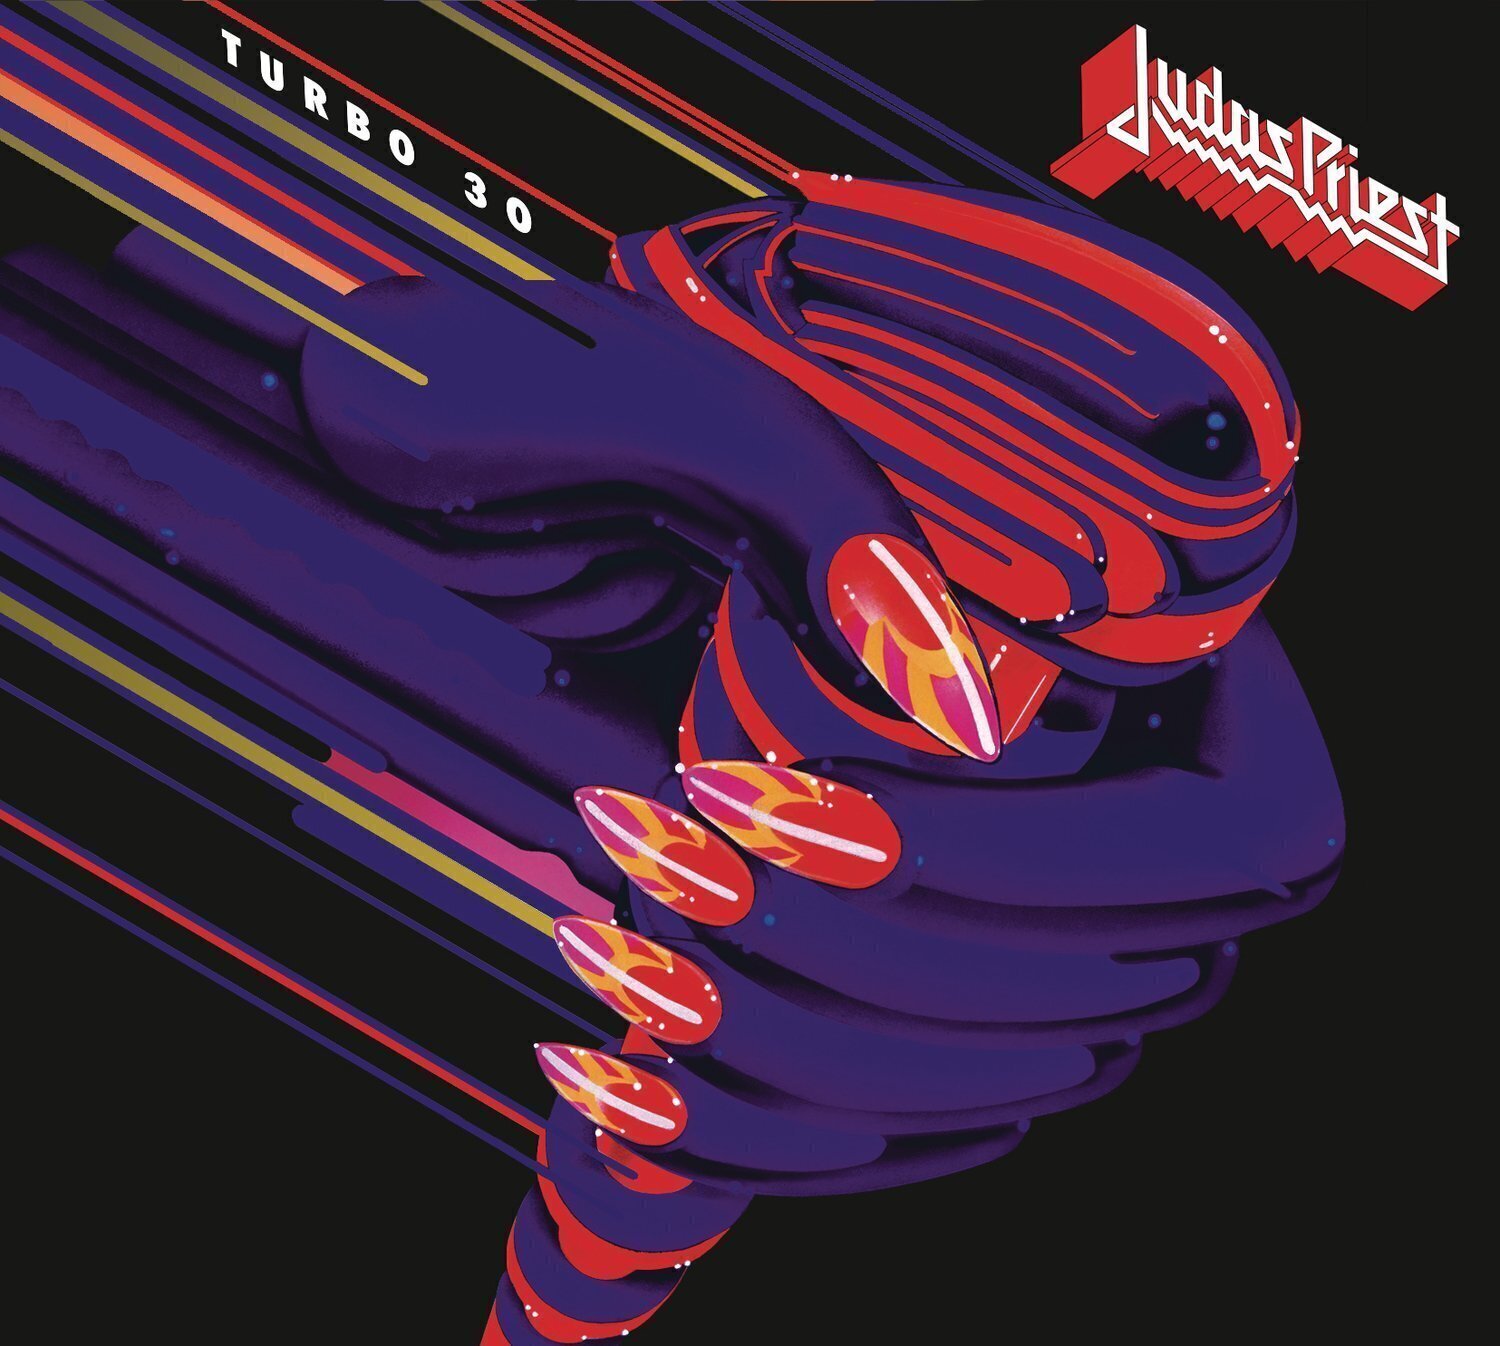 Music CD Judas Priest - Turbo 30 (Anniversary Edition) (Remastered) (3 CD)